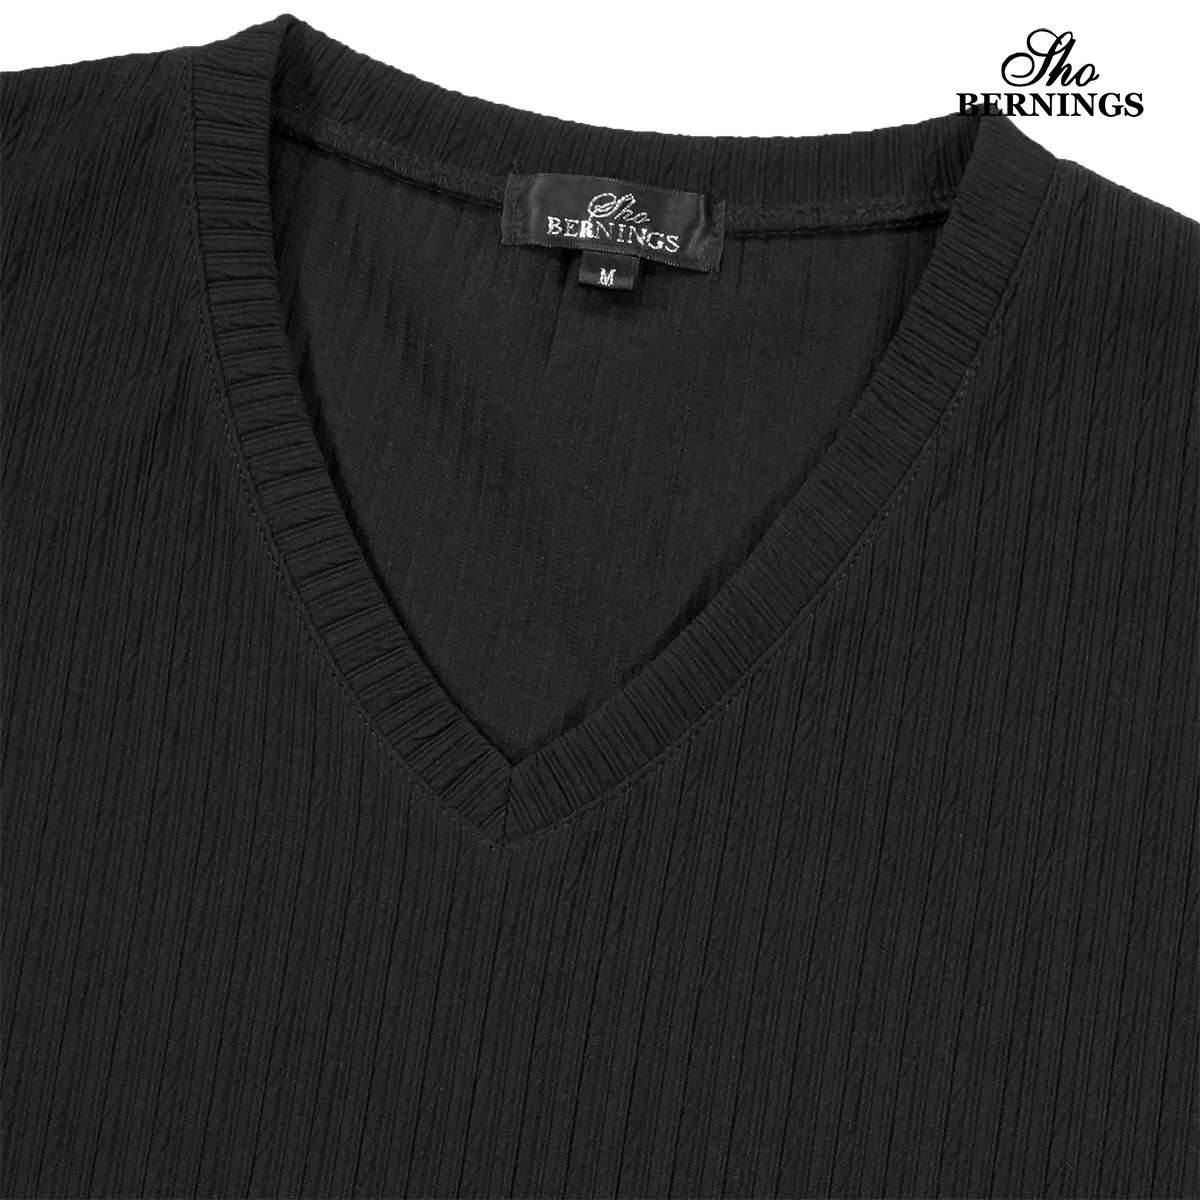 317932-90 Bernings sho Tシャツ Vネック ストライプ織柄 ジャガード メンズ シンプル 半袖 (ブラック黒) L カットソー トップス タイト_画像5